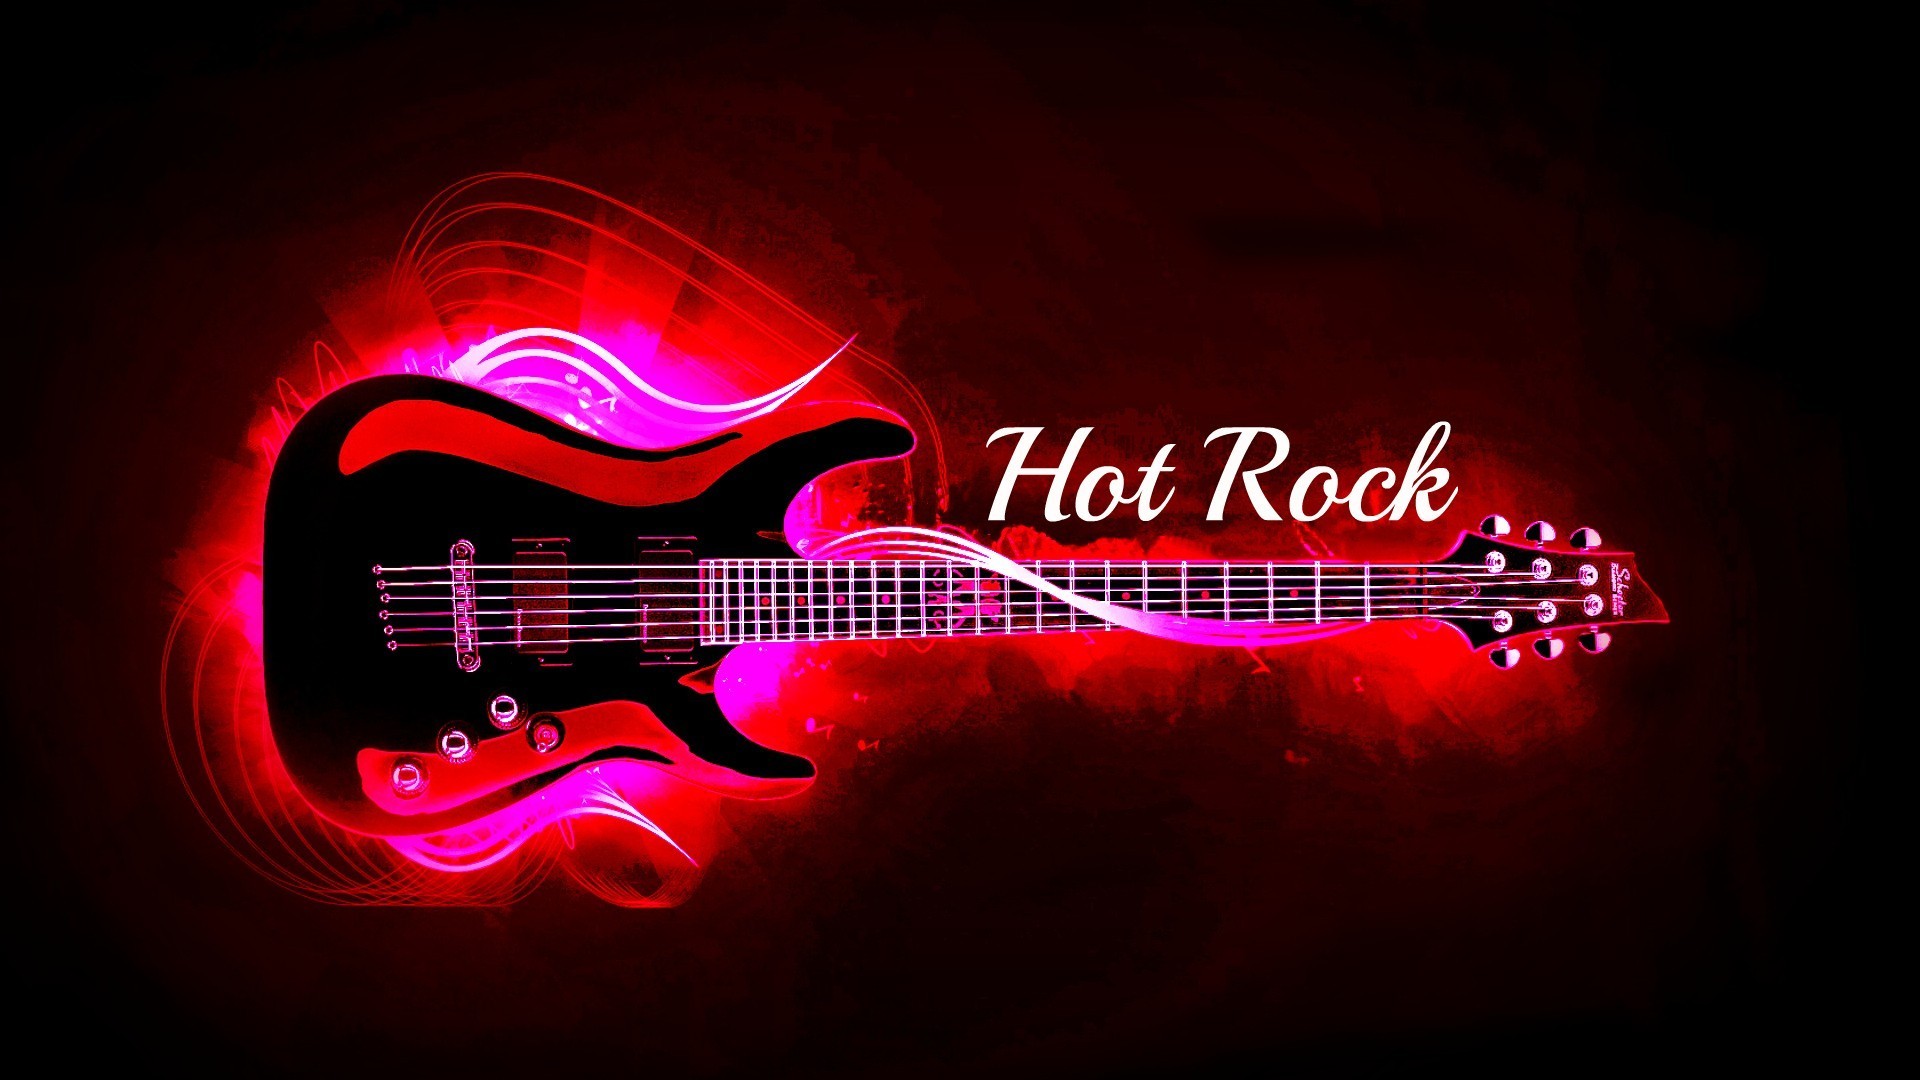 1920x1080 Hot rock guitar wallpaper